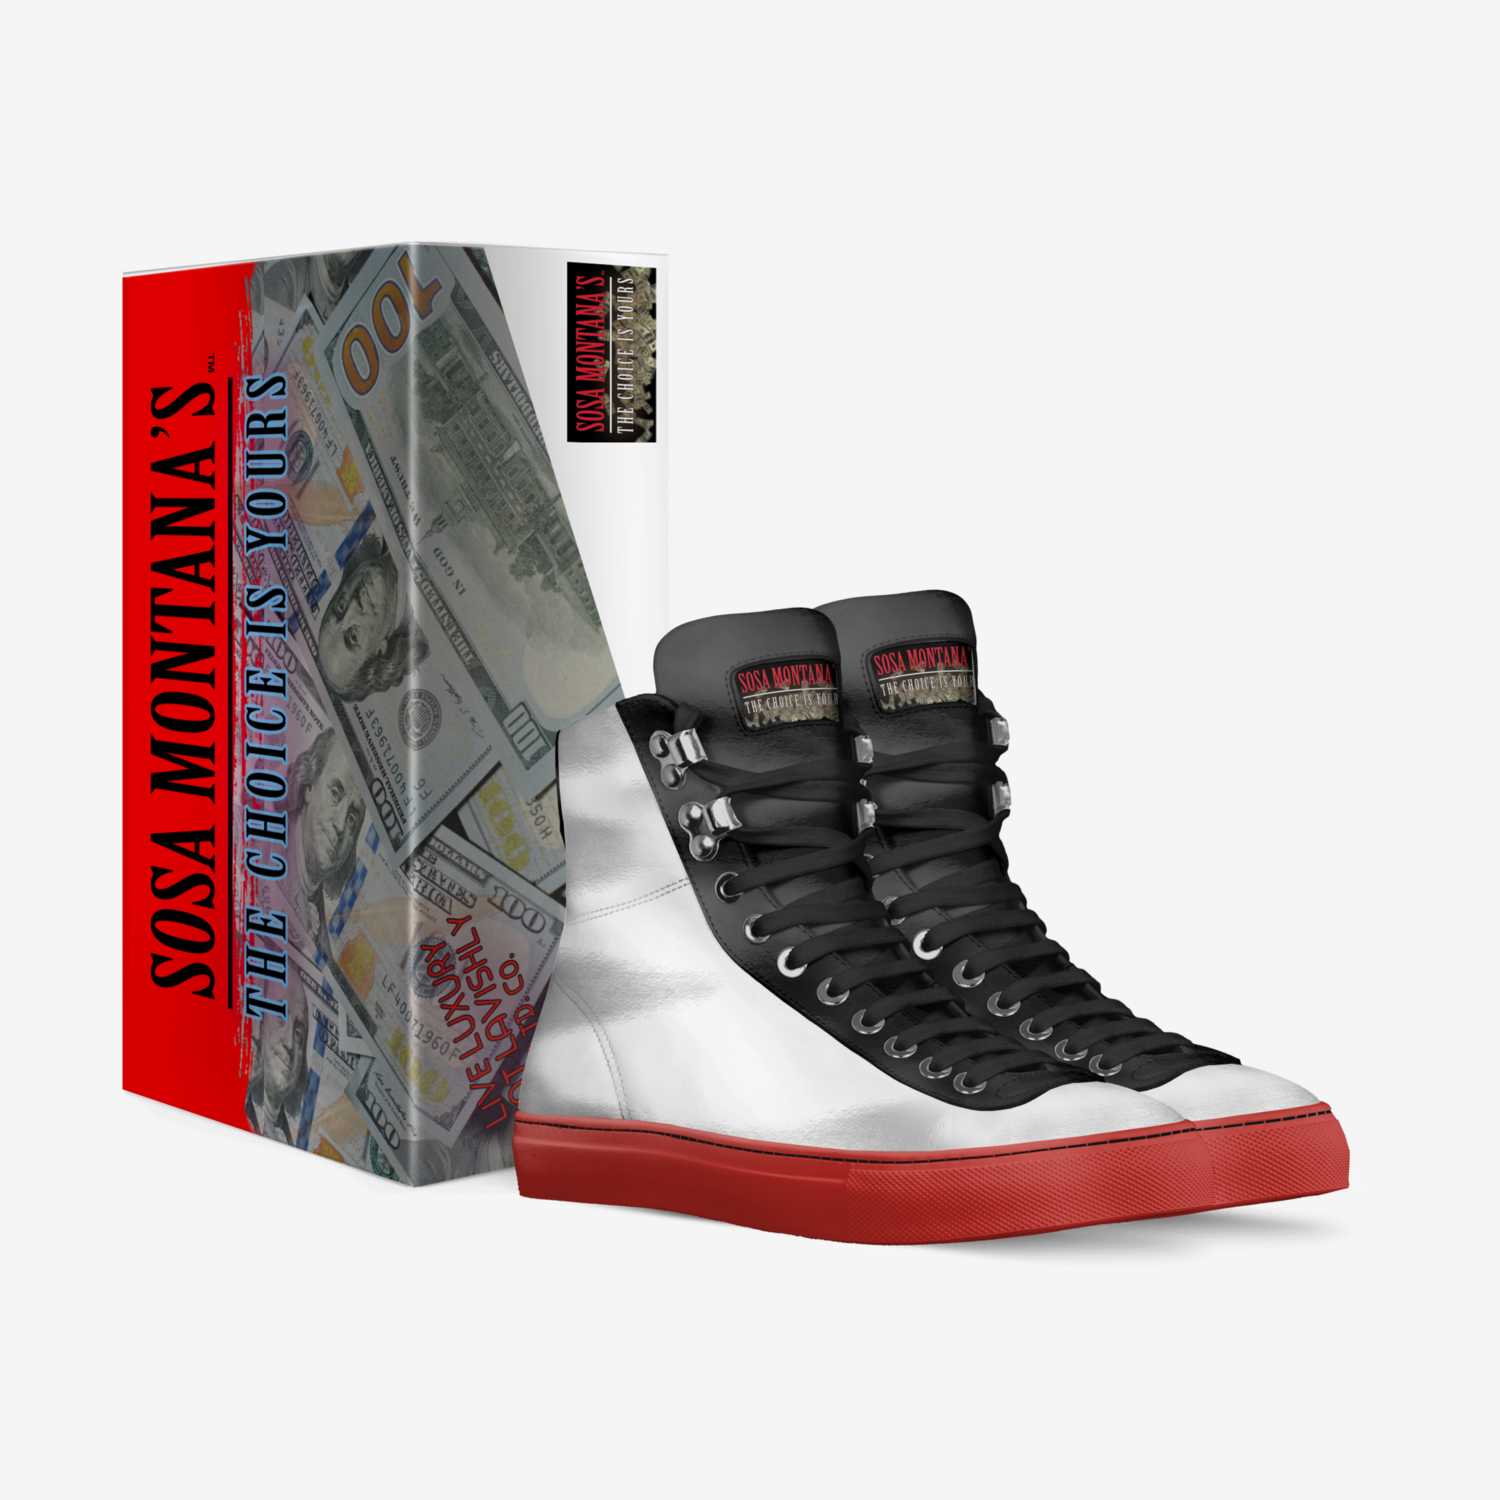 "SOSA MONTANA'S" custom made in Italy shoes by Live Luxury Eat Lavishly | Box view